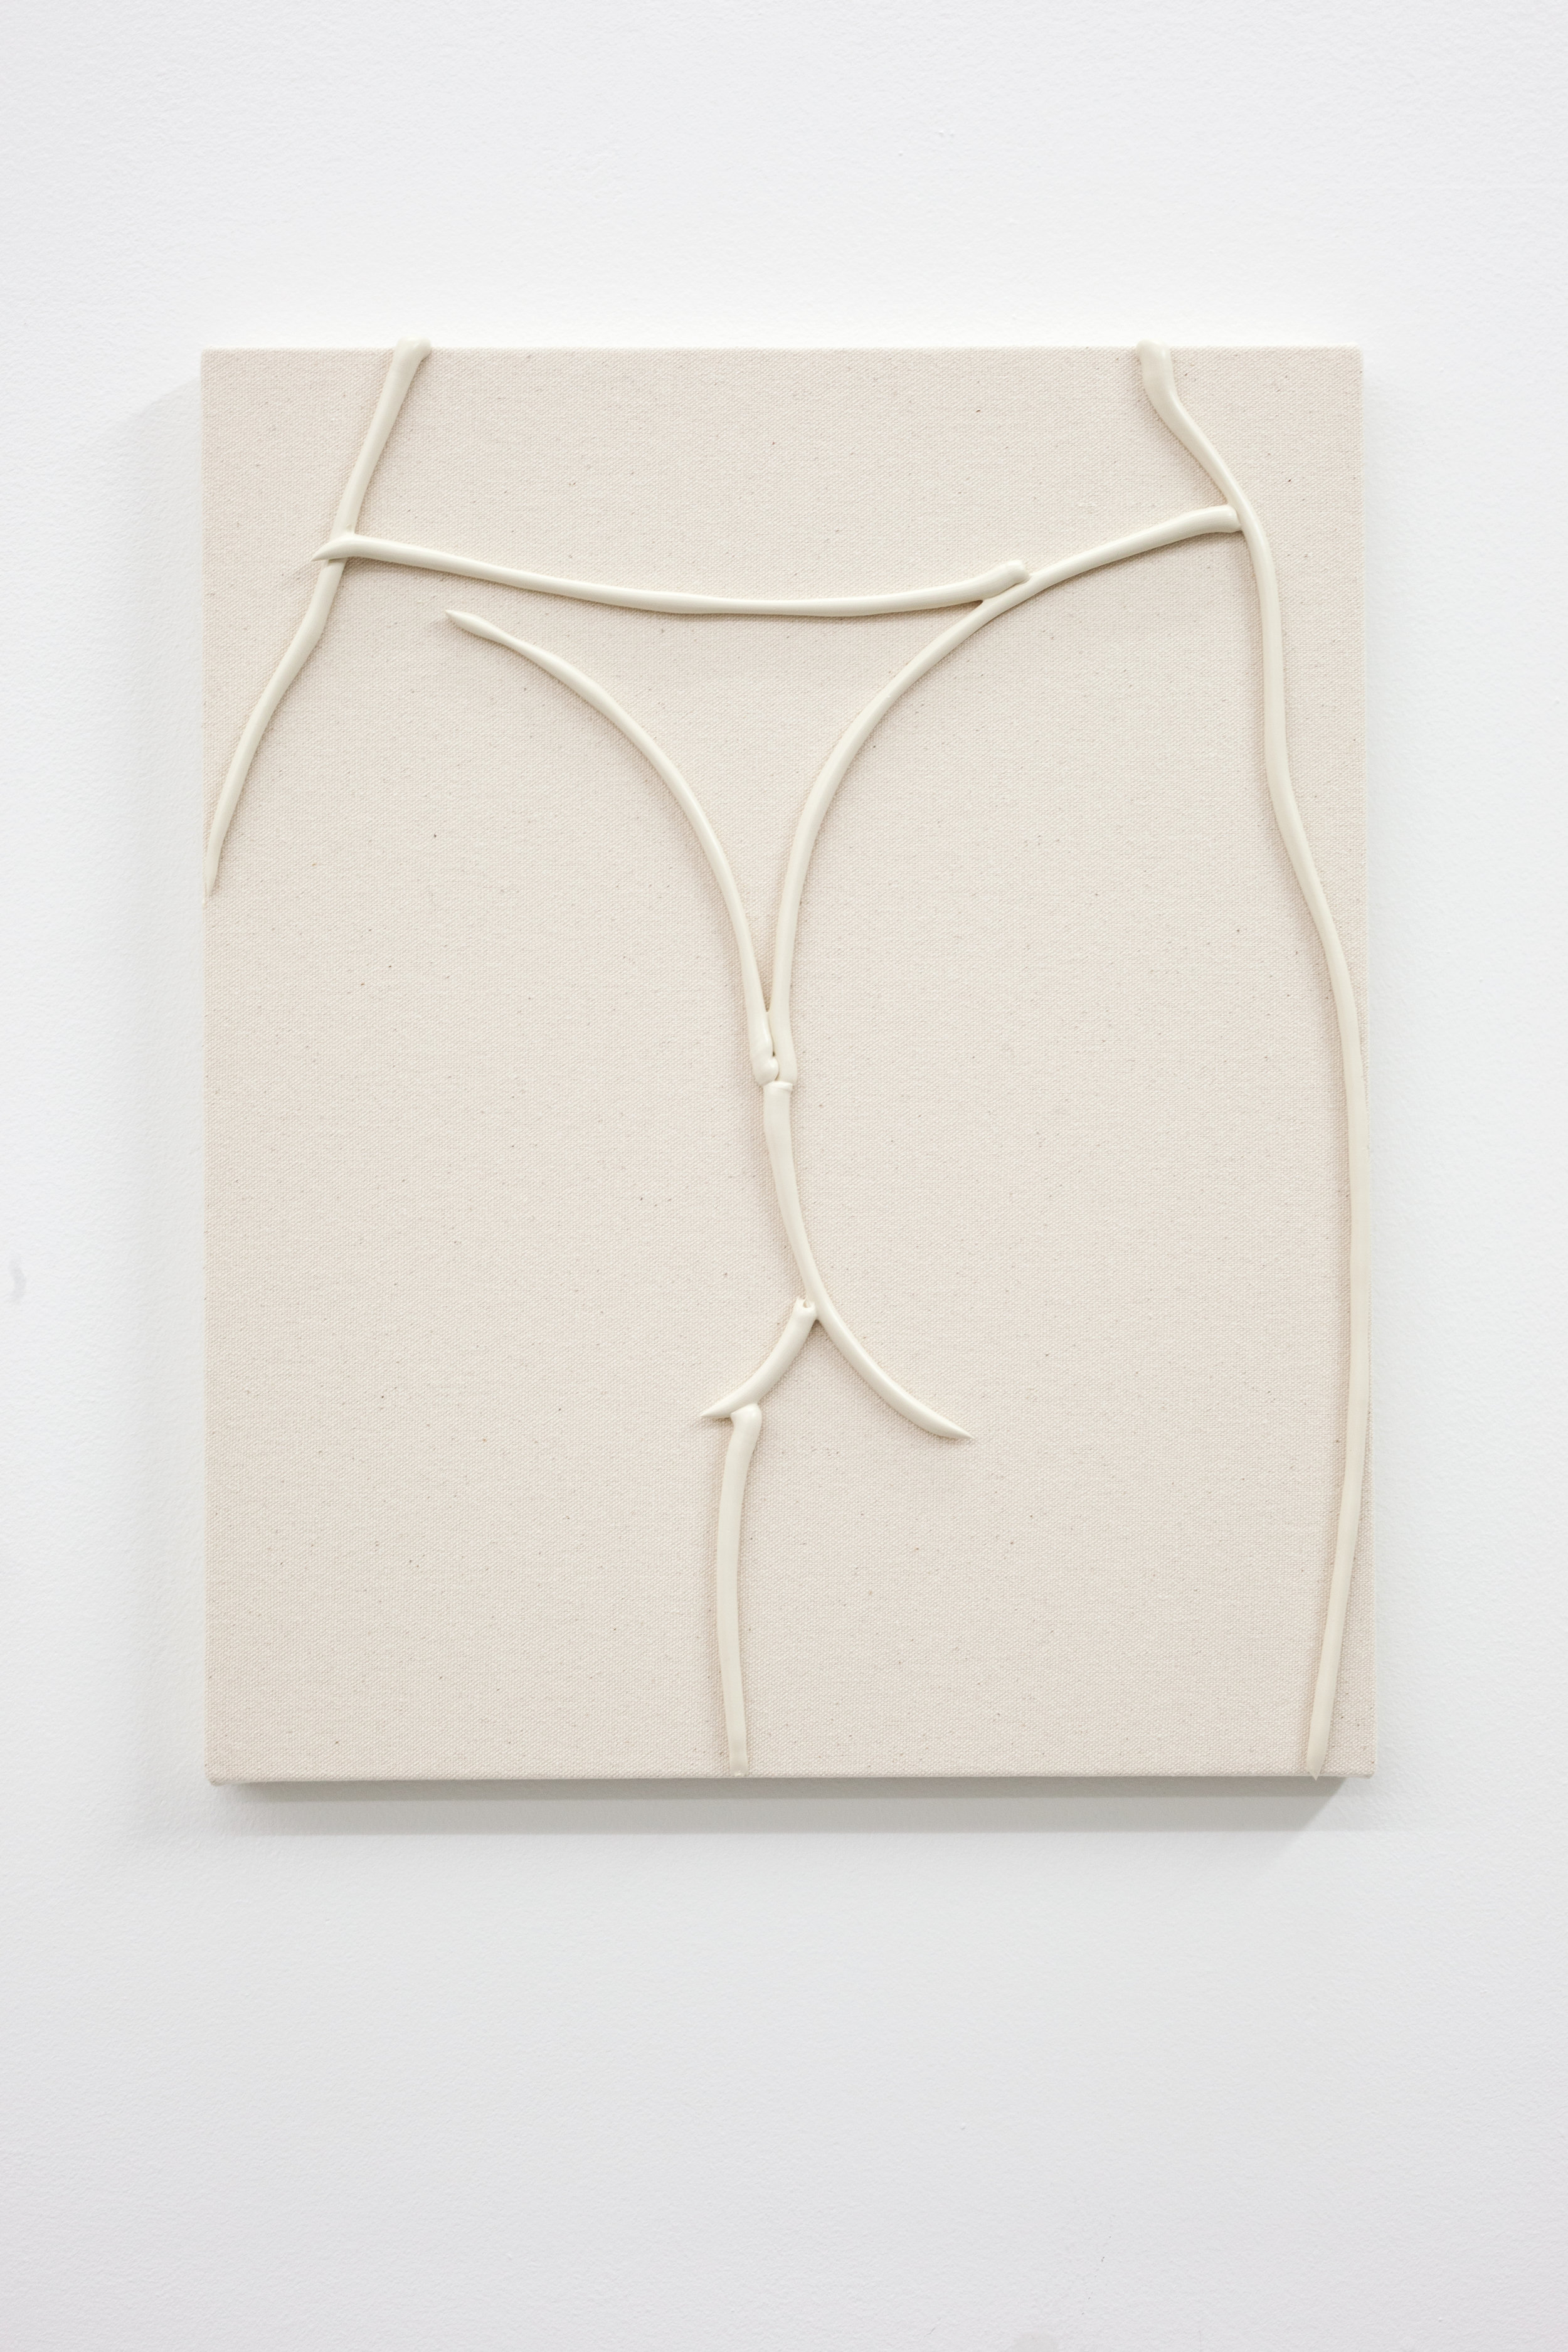  Omari Douglin,  Untitled (Butt Painting),  2019, Caulk on Raw Canvas, 16x13in 